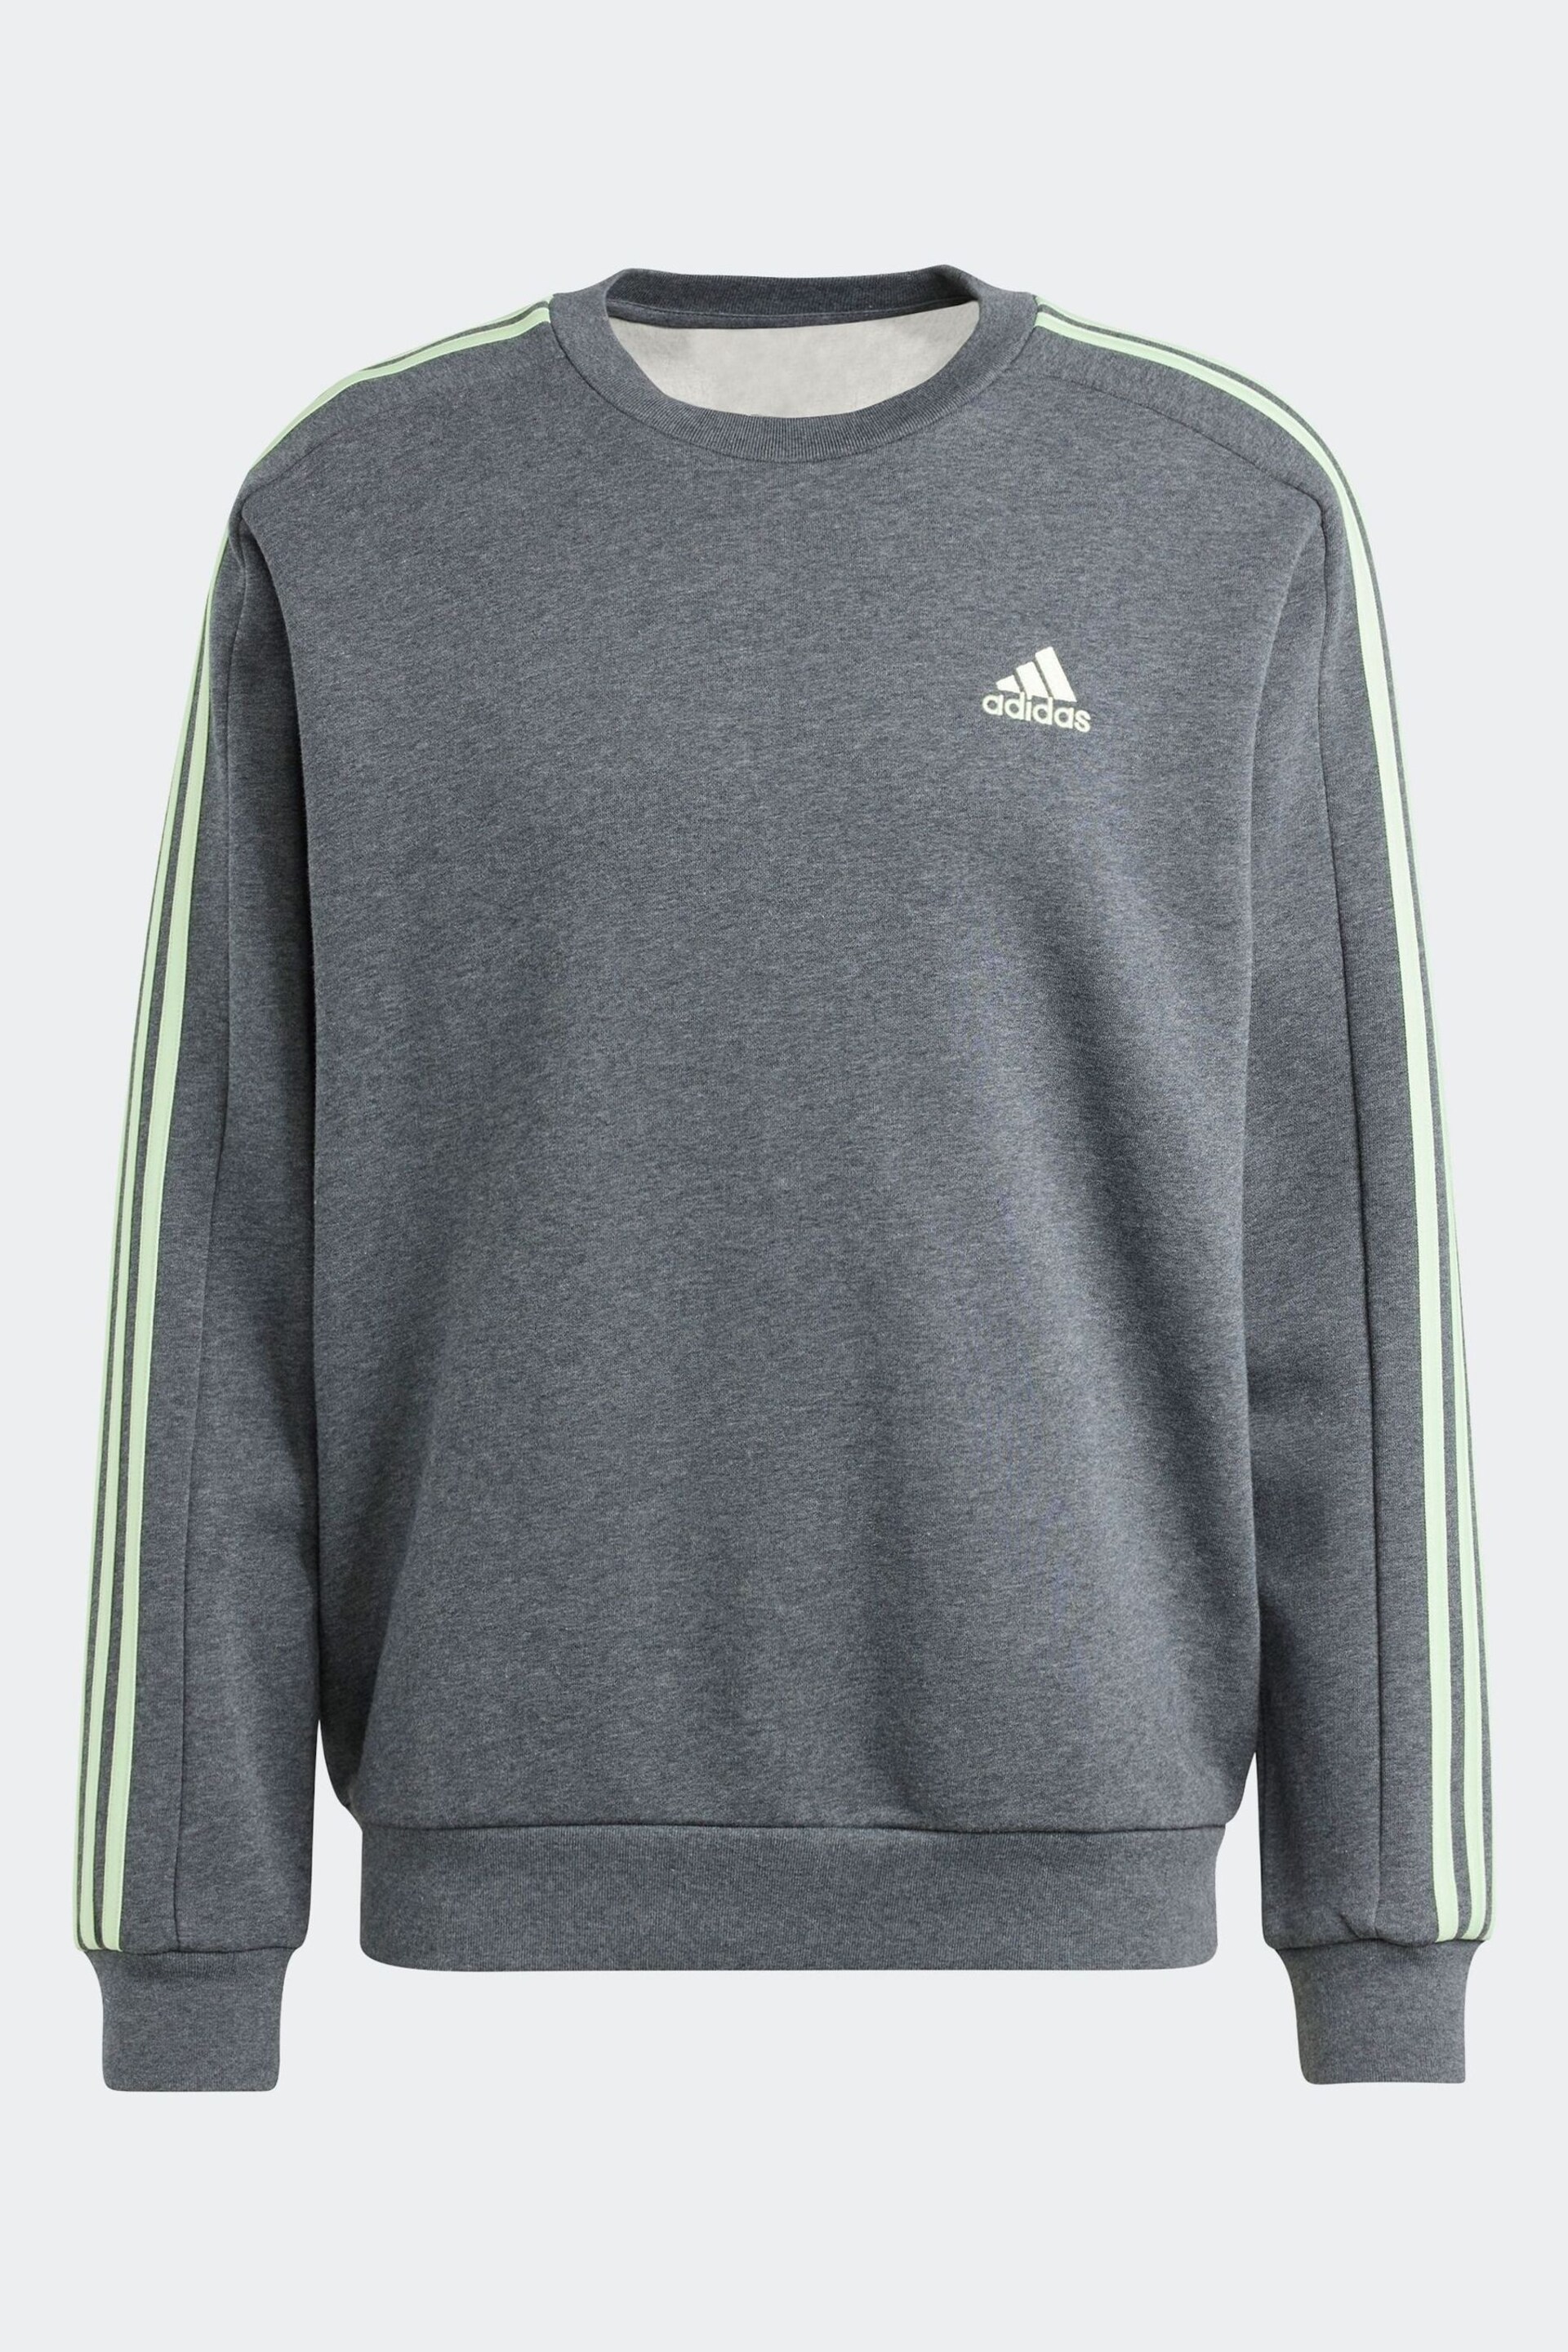 adidas Grey Sportswear Essentials Fleece 3-Stripes Sweatshirt - Image 6 of 6